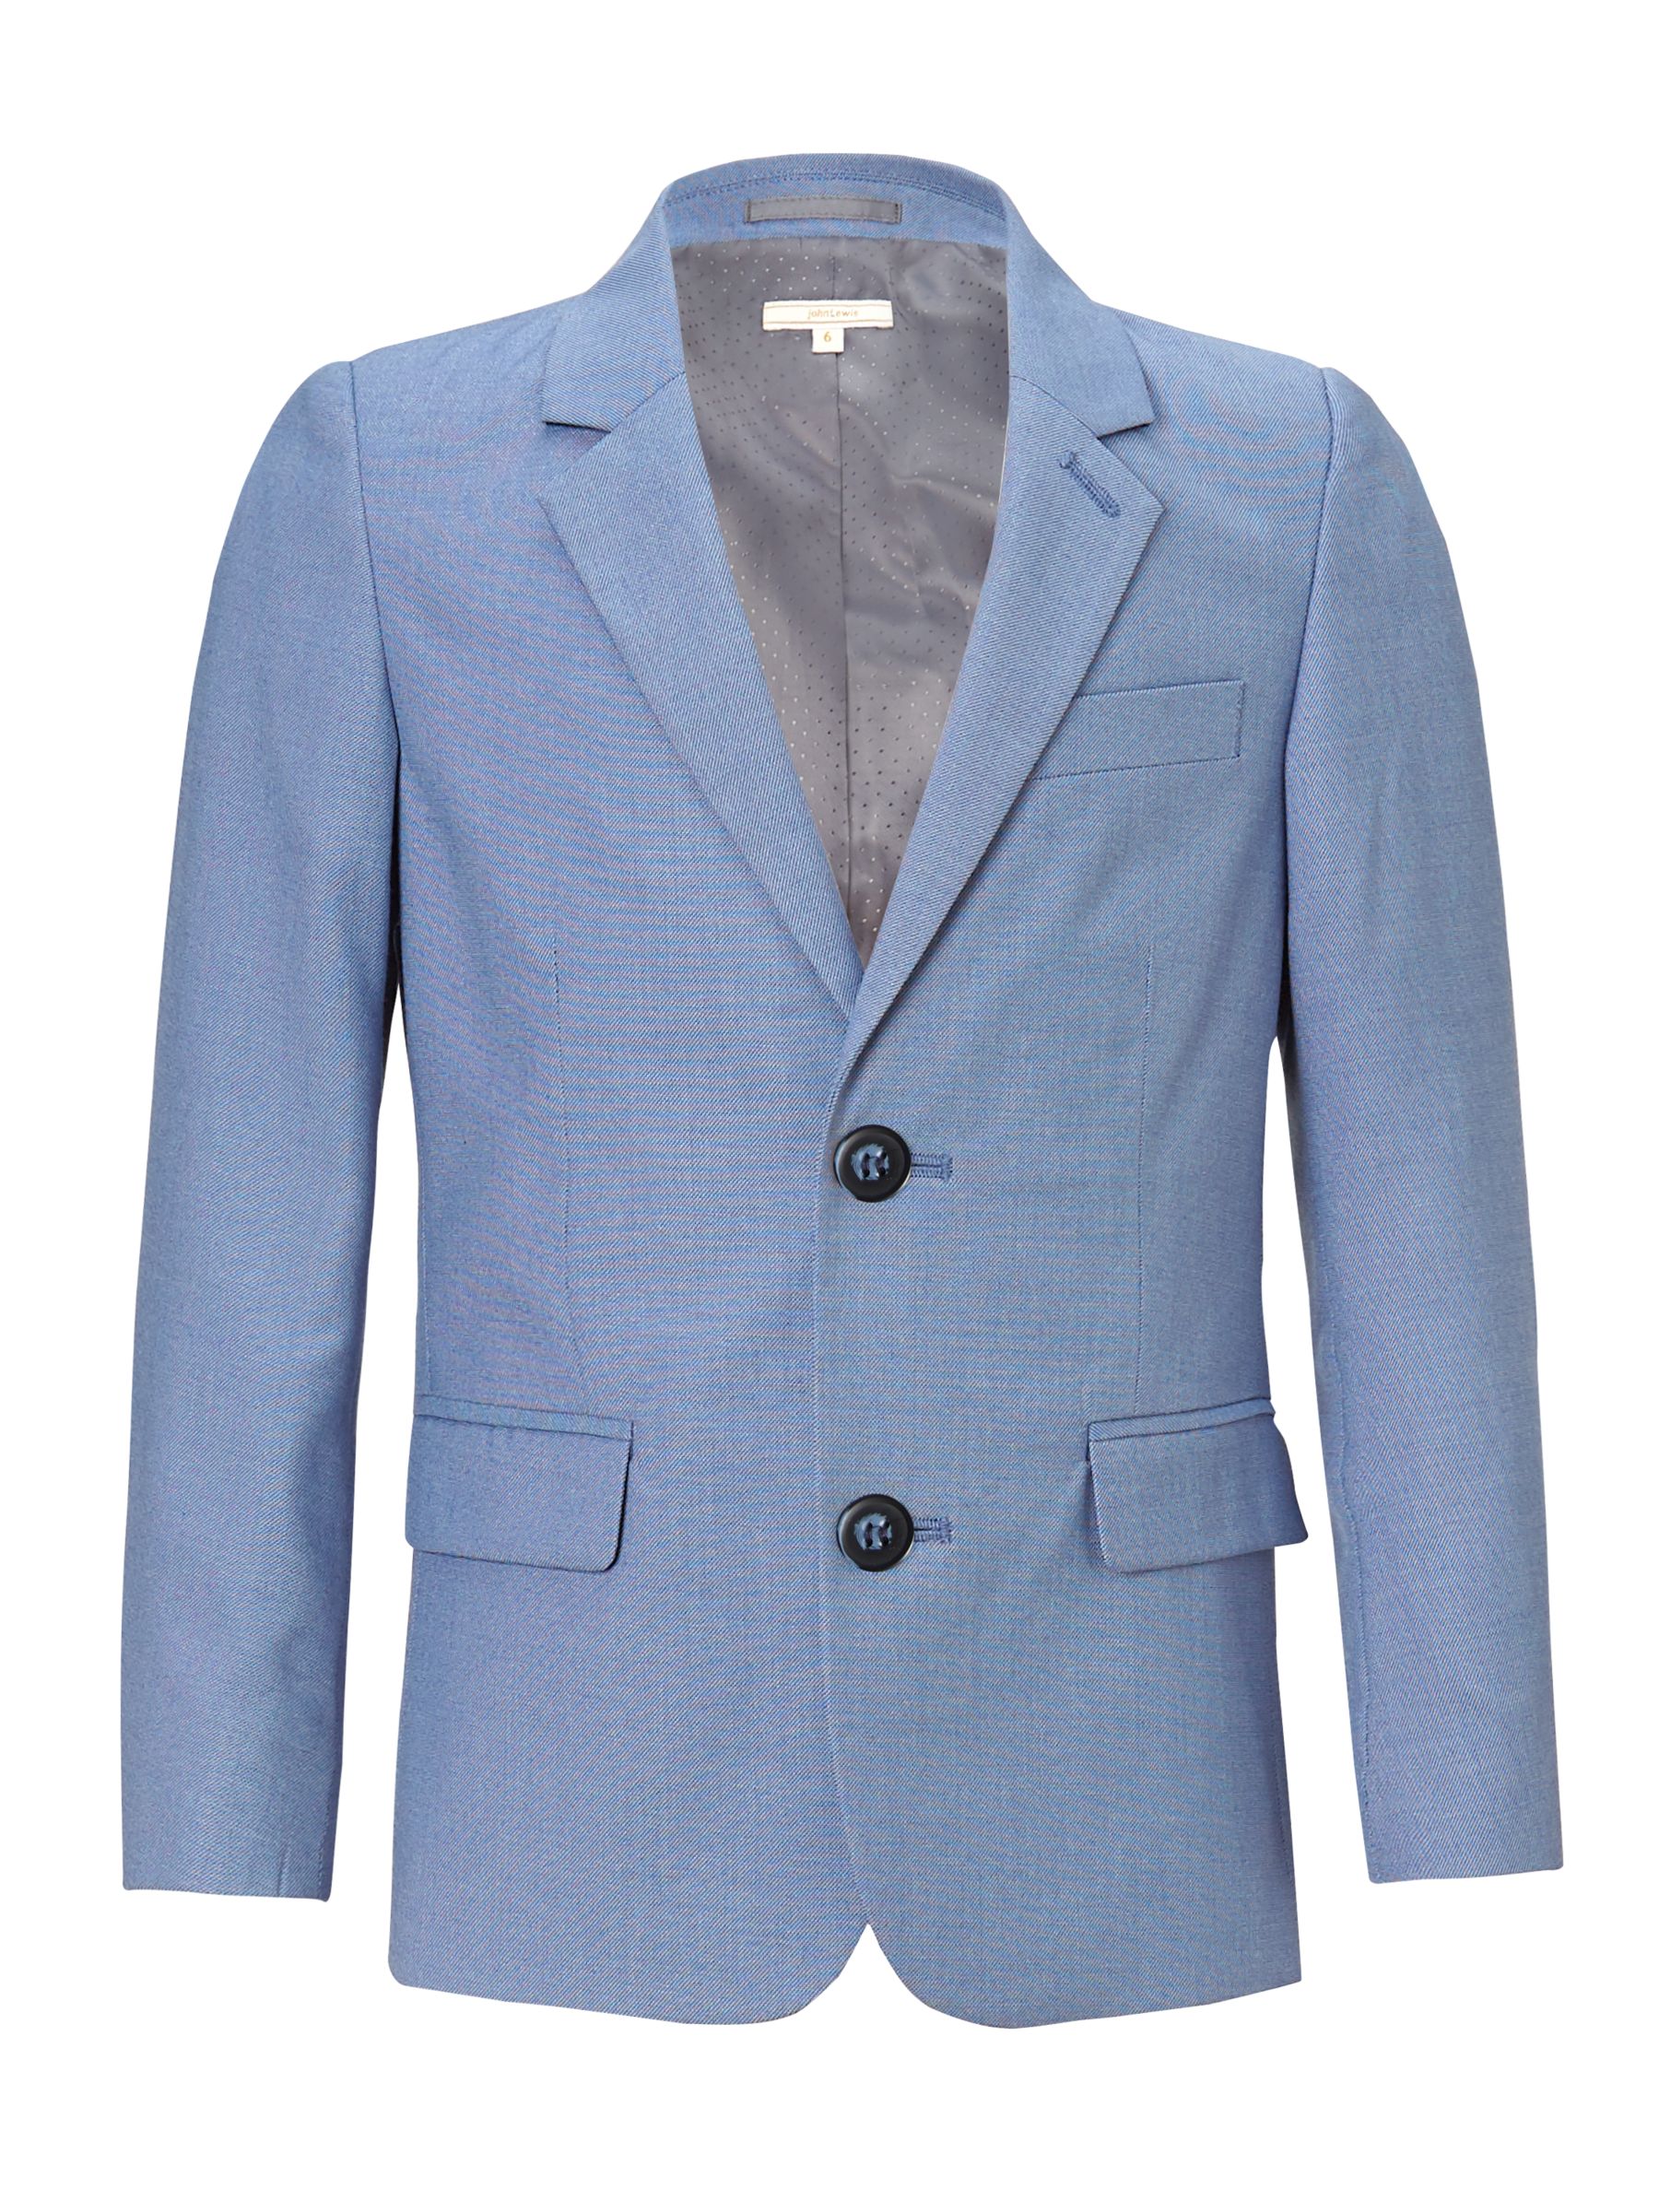 John Lewis Heirloom Collection Boys' Suit Jacket, Mid Blue